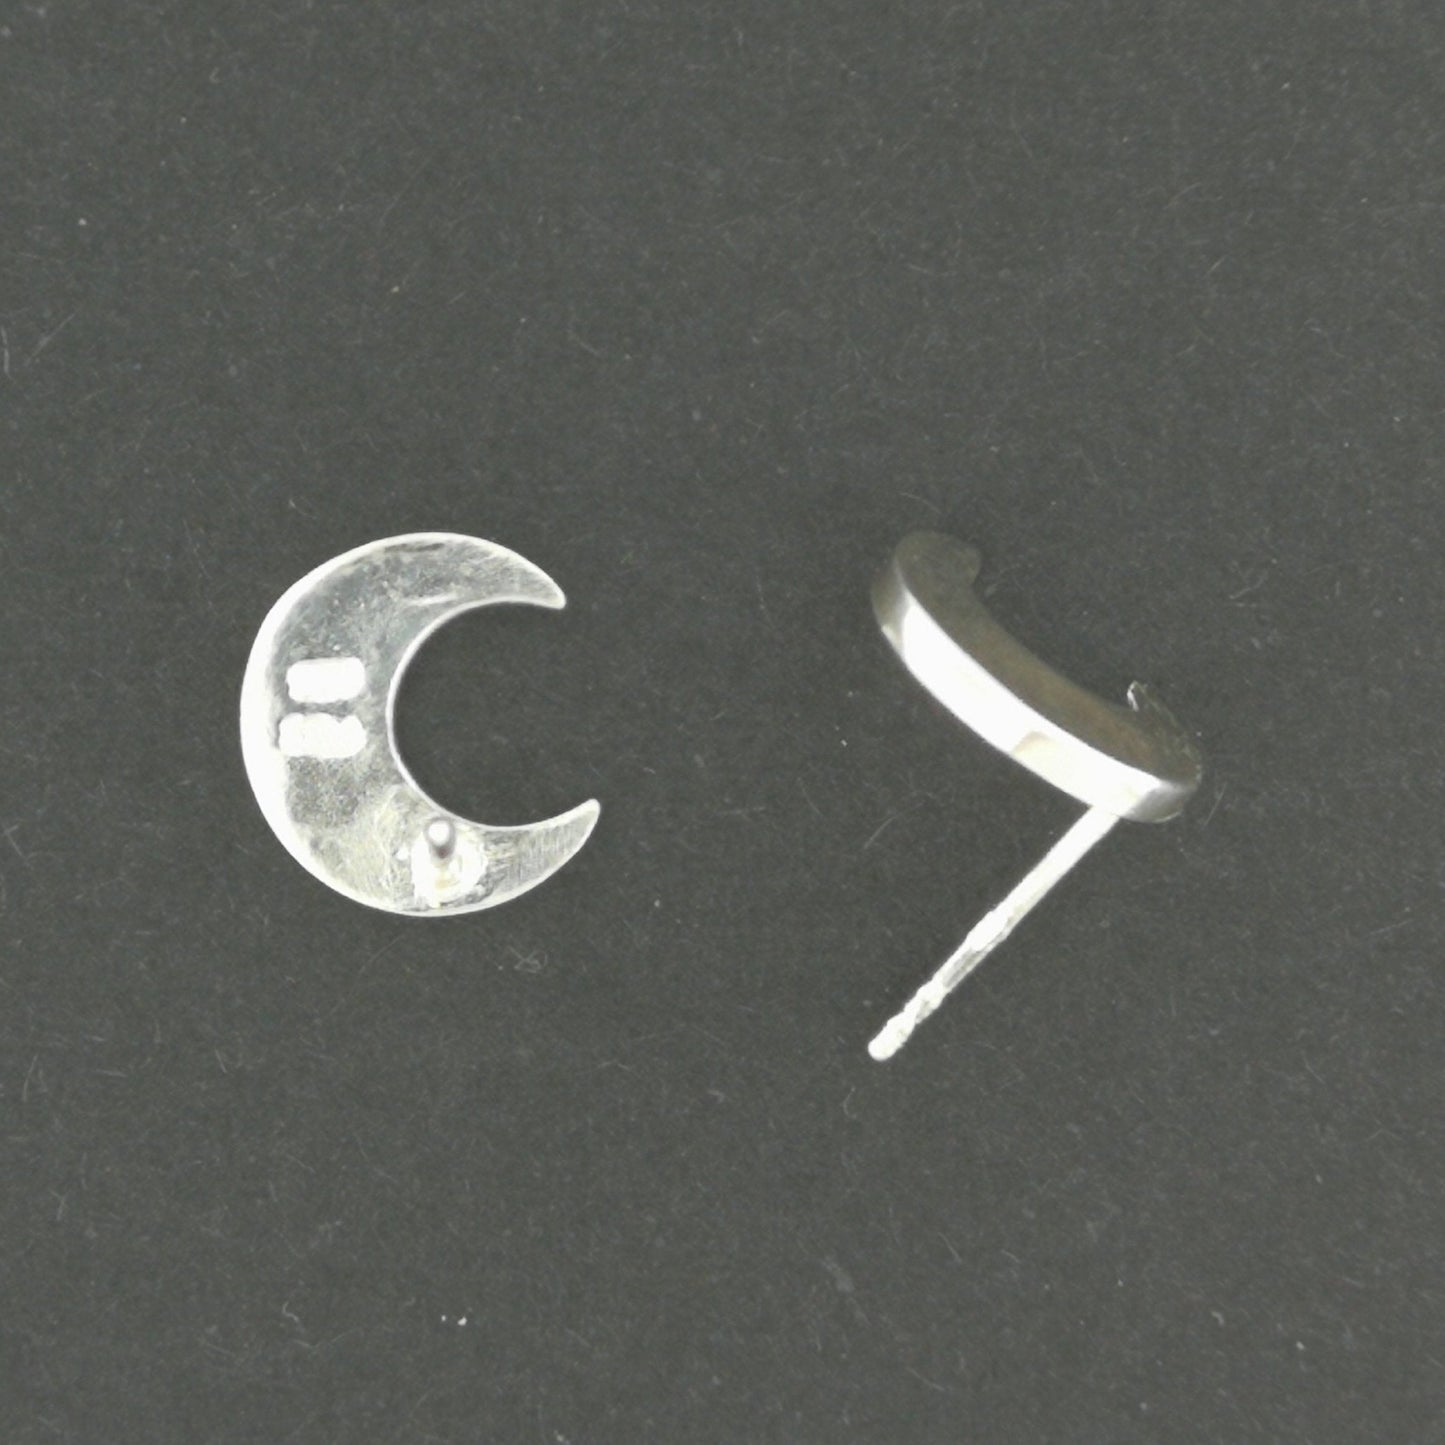 Handmade Crescent Moon Stud Earrings in Sterling Silver